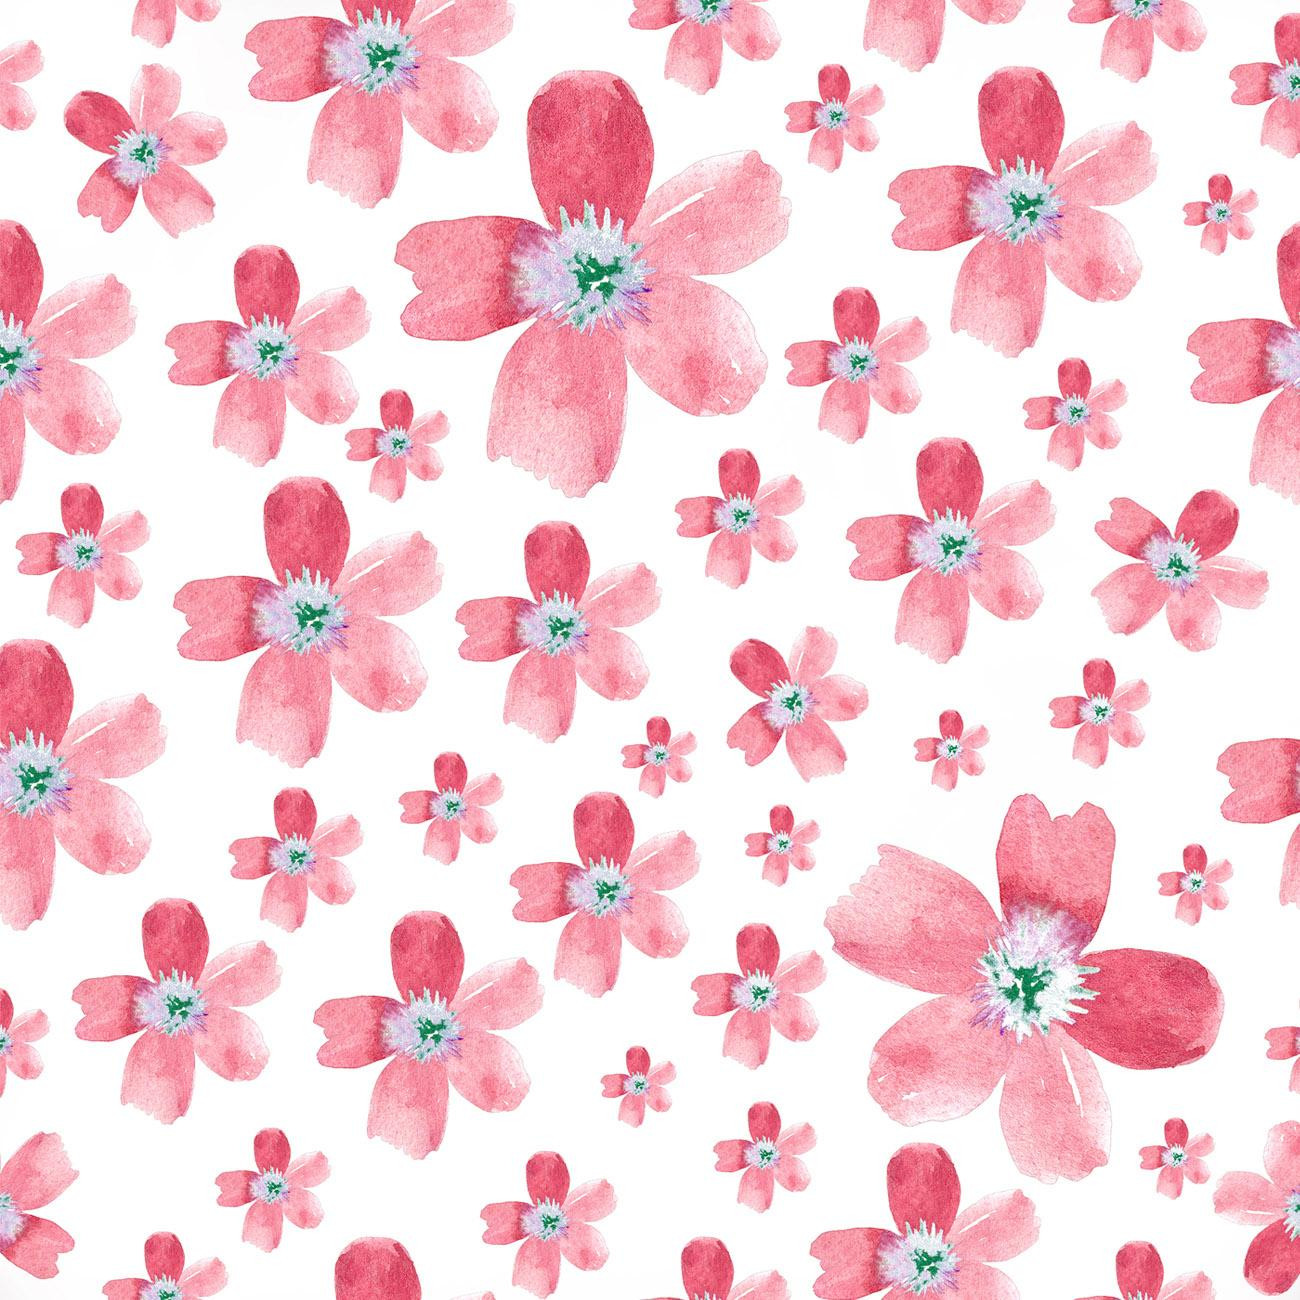 PINK FLOWERS PAT. 5 / white 